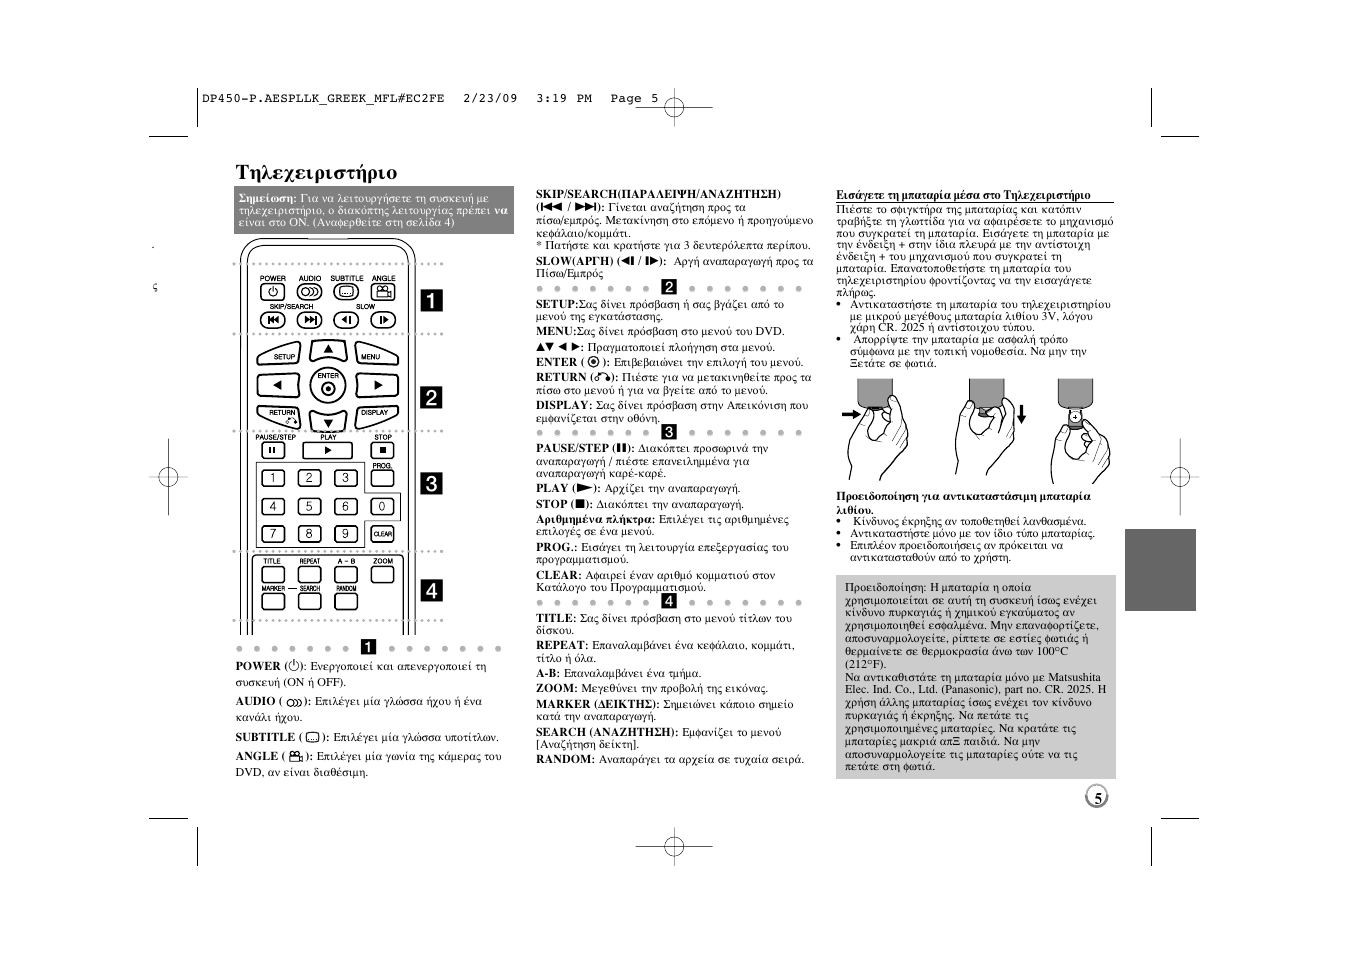 Ab c d δëïâ¯виъиыщ‹ъиф | LG DP450 User Manual | Page 61 / 70